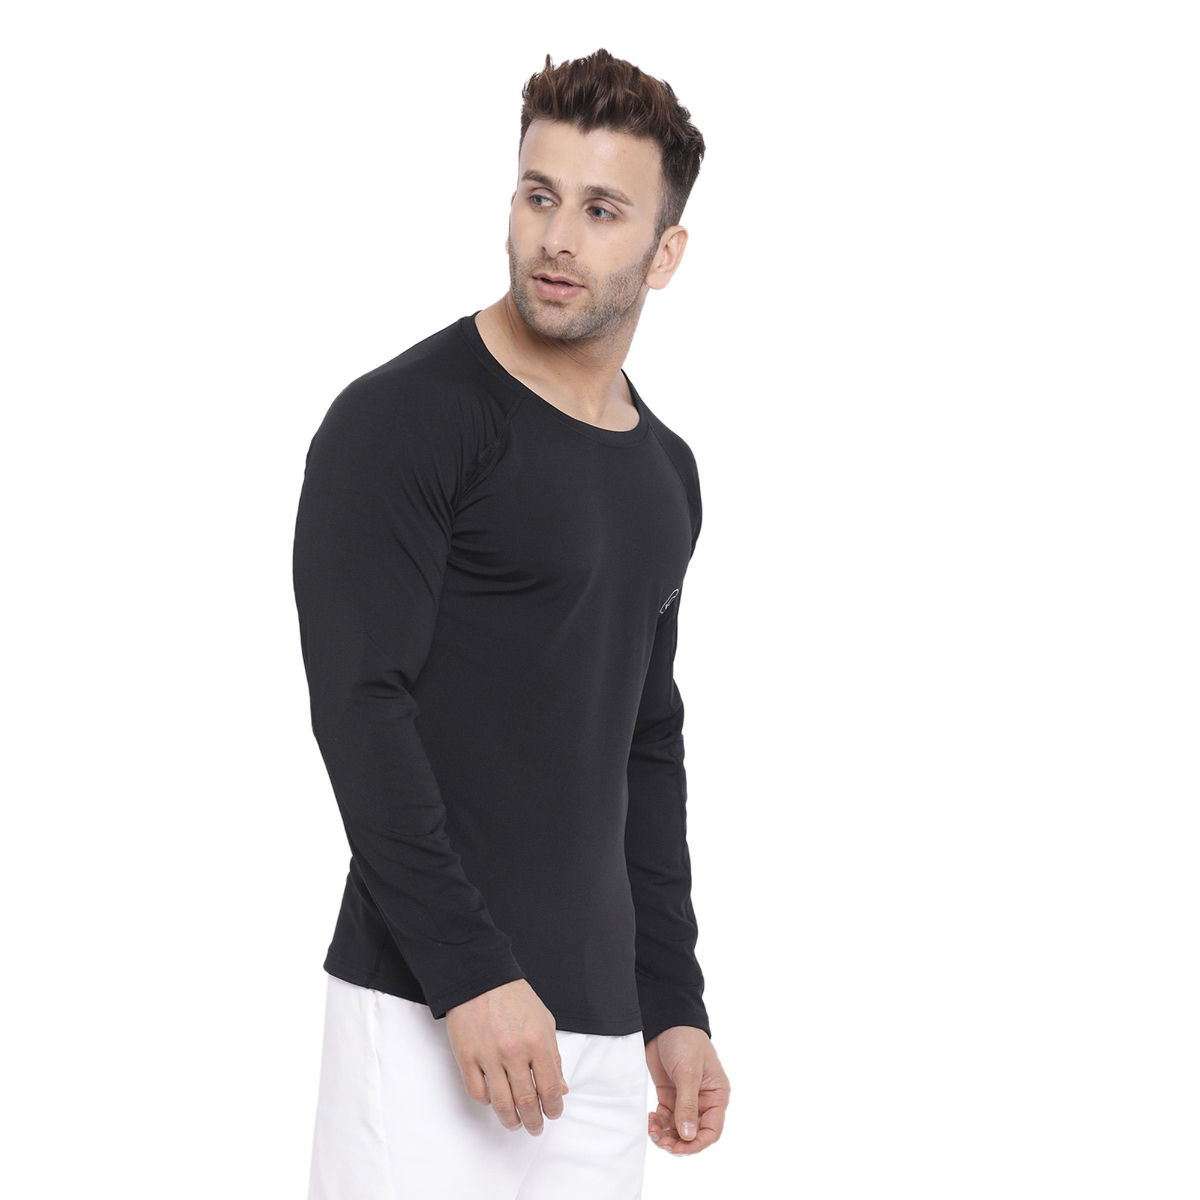 CHKOKKO Mens Round Neck Full Sleeves Compression T-Shirt Black (XL)